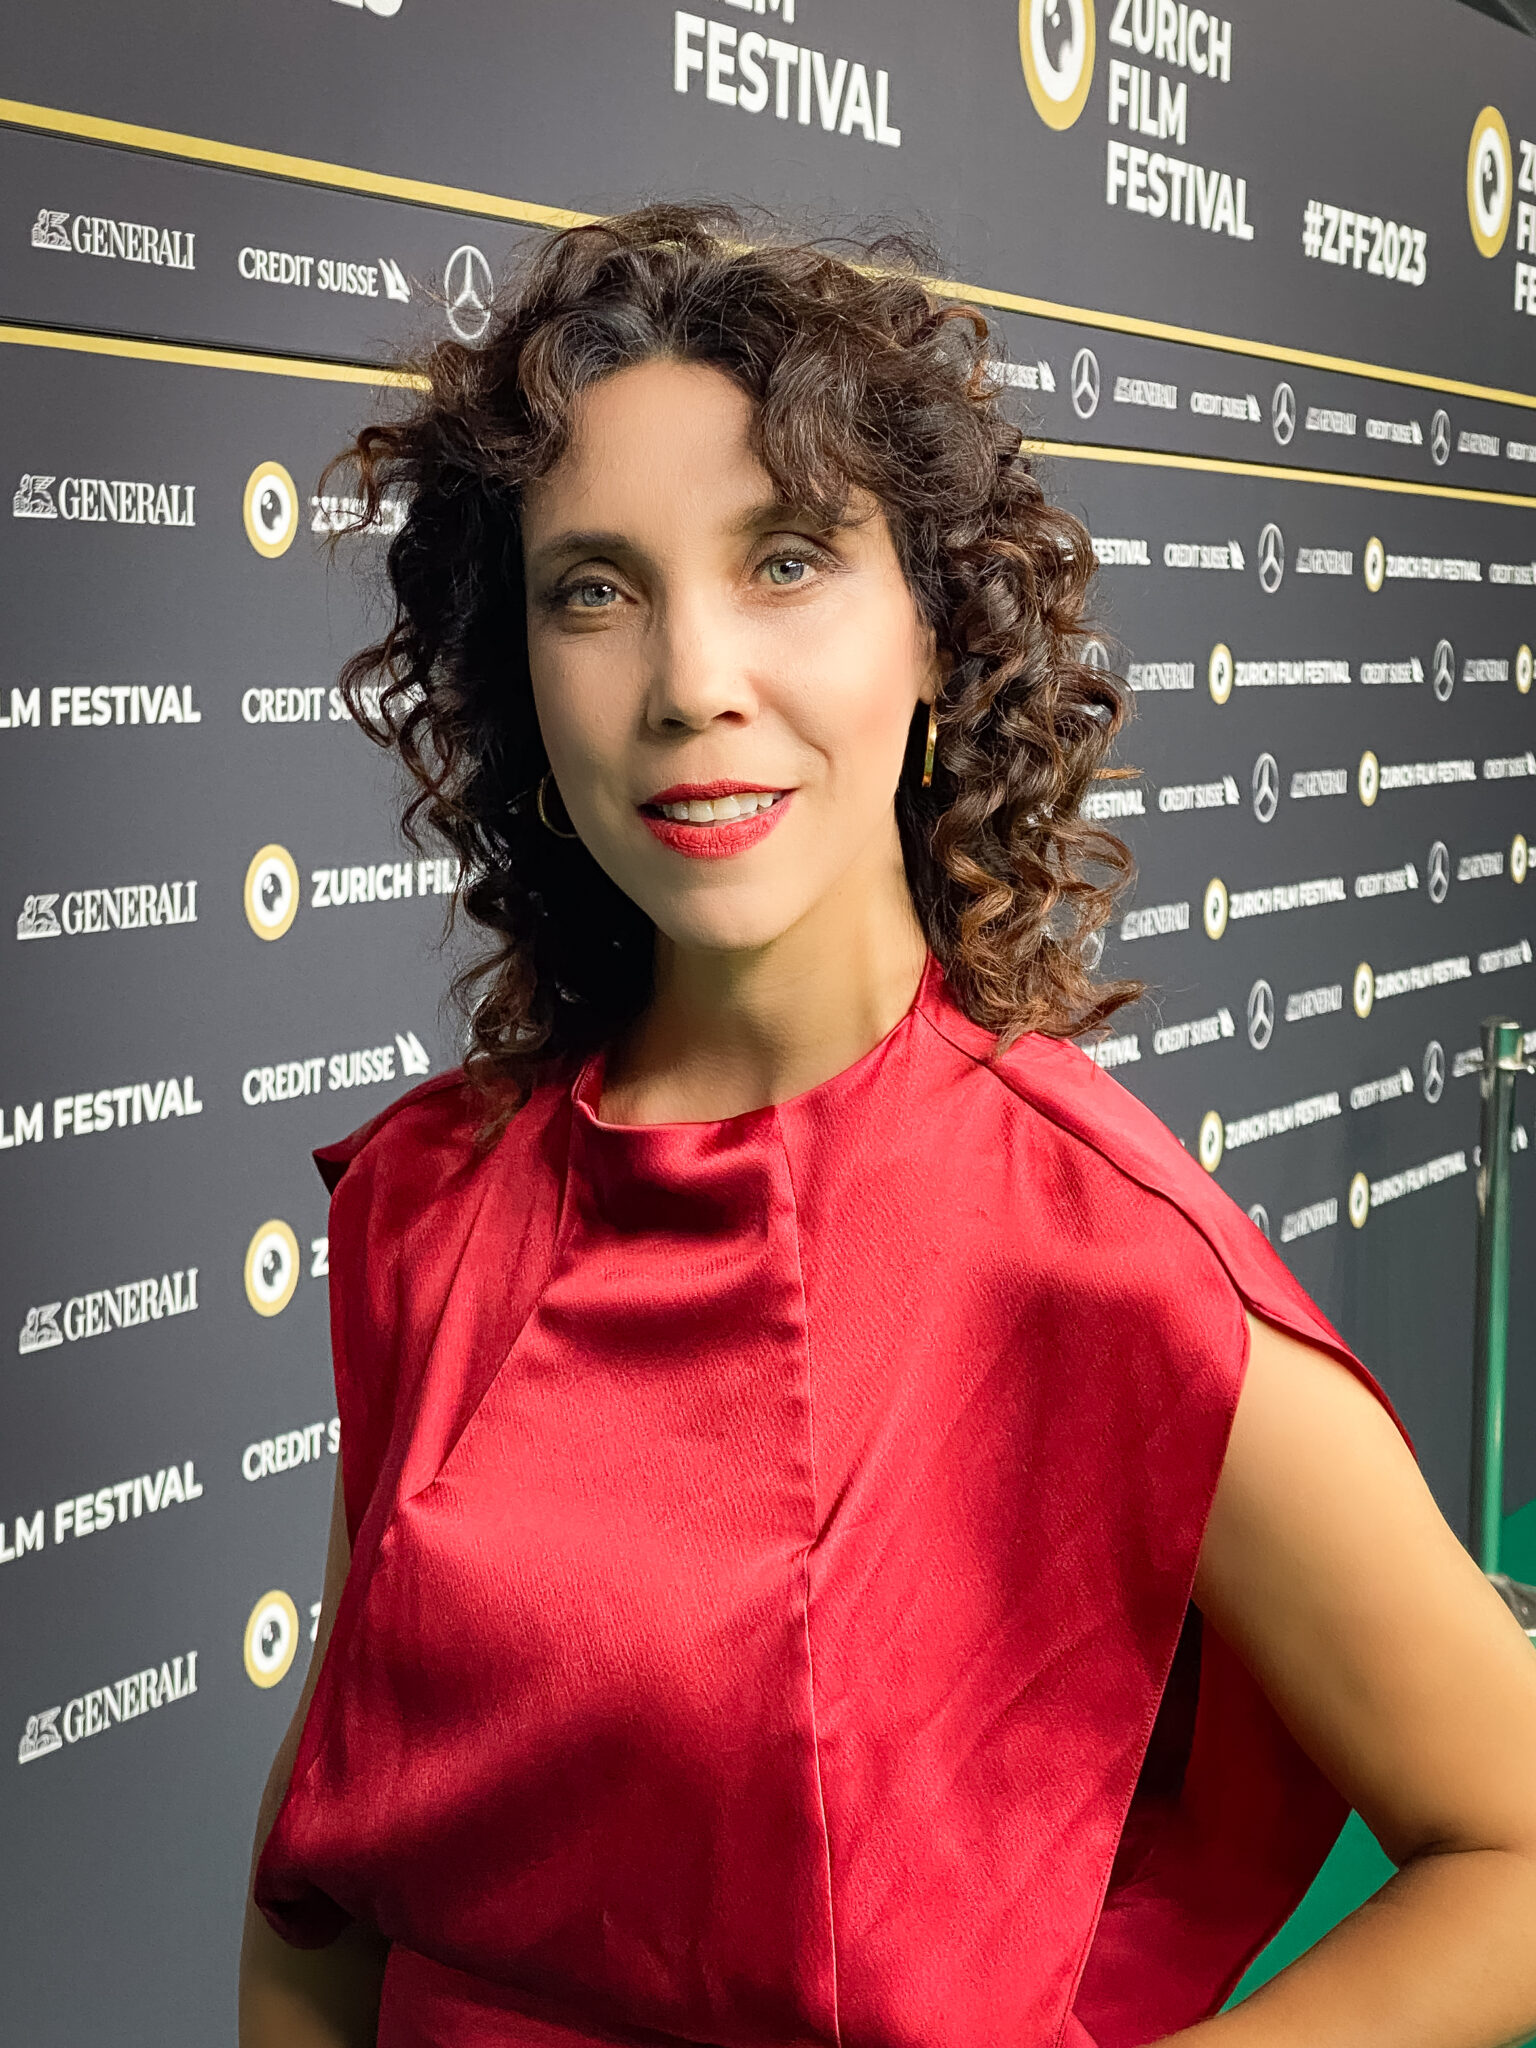 Irina Kastrinidis am Filmfestival Zürich